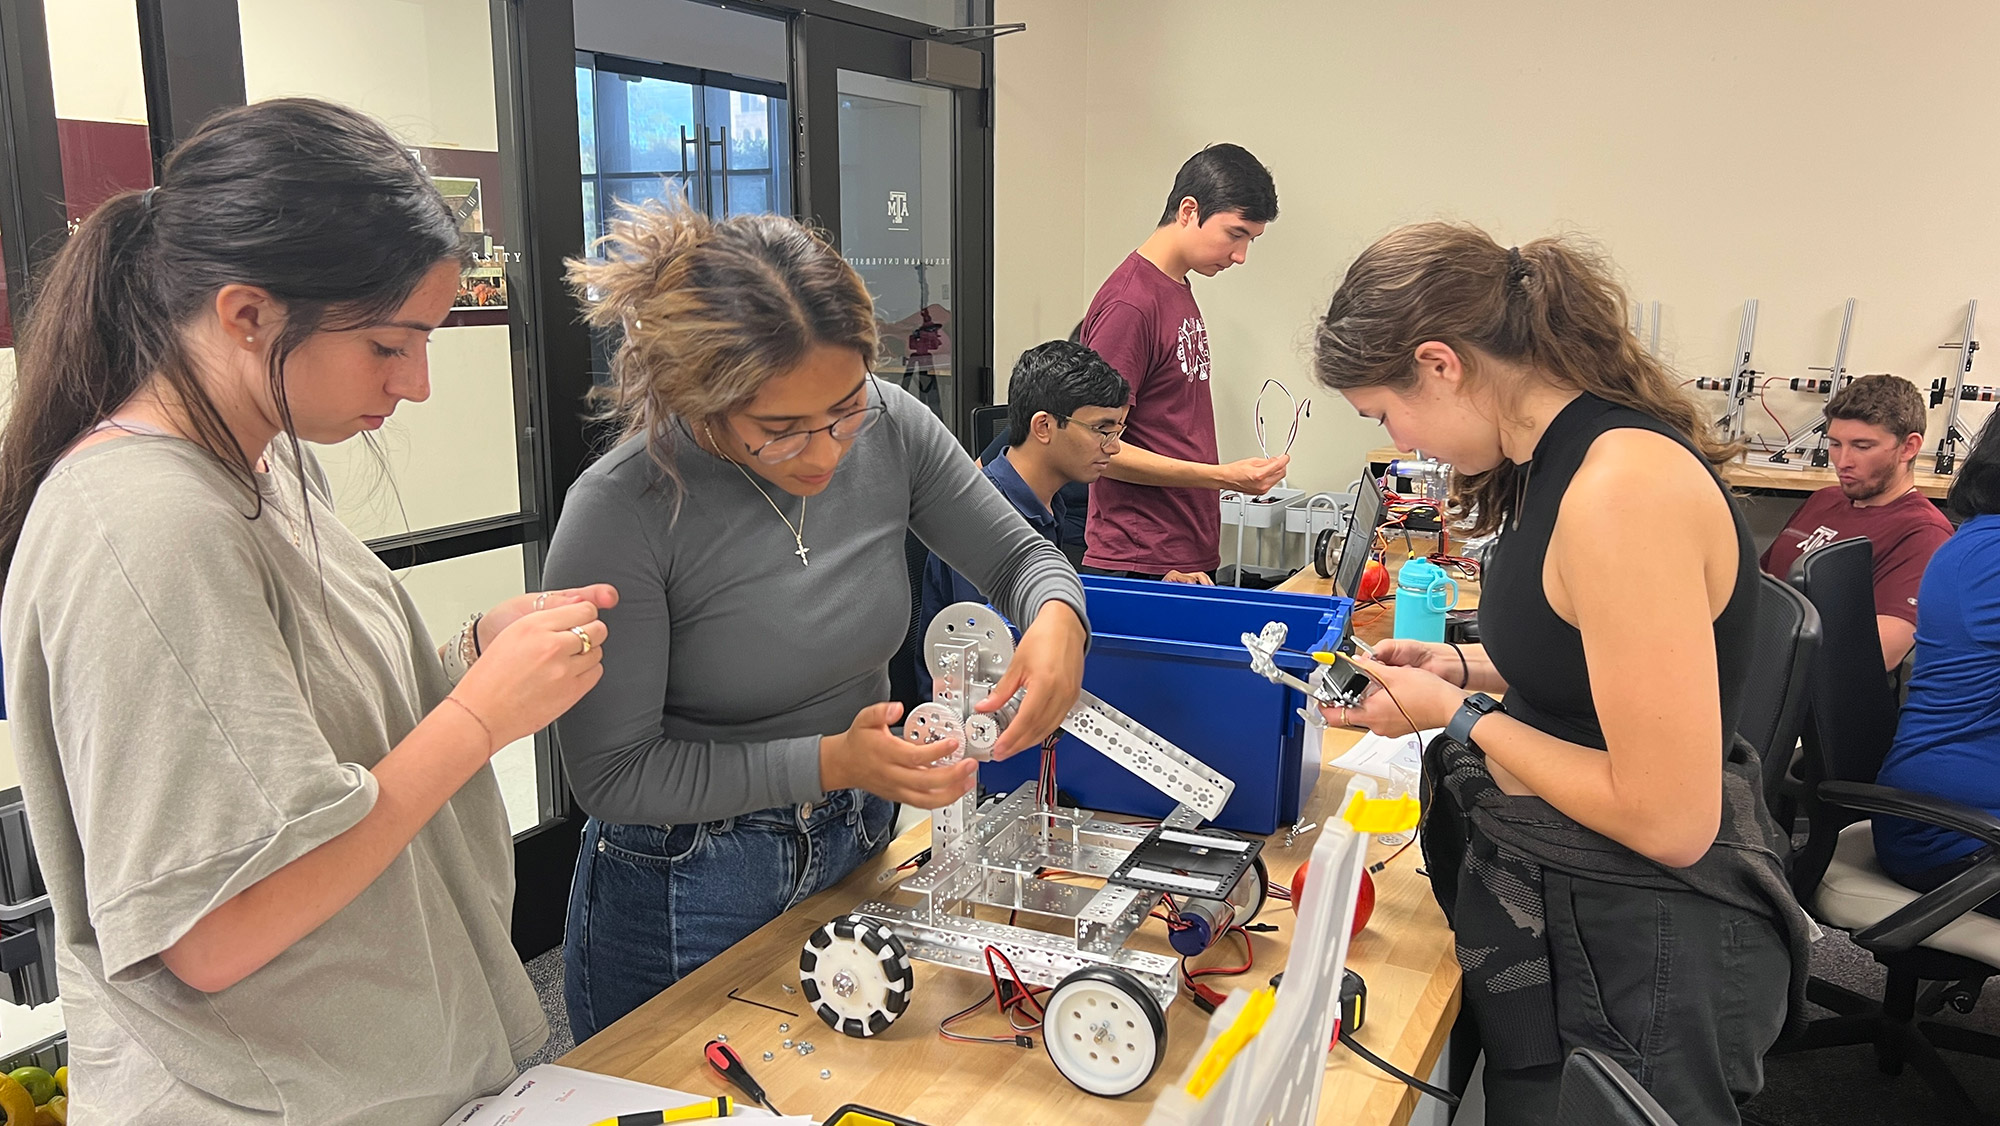 Seven students work on a robotics project.